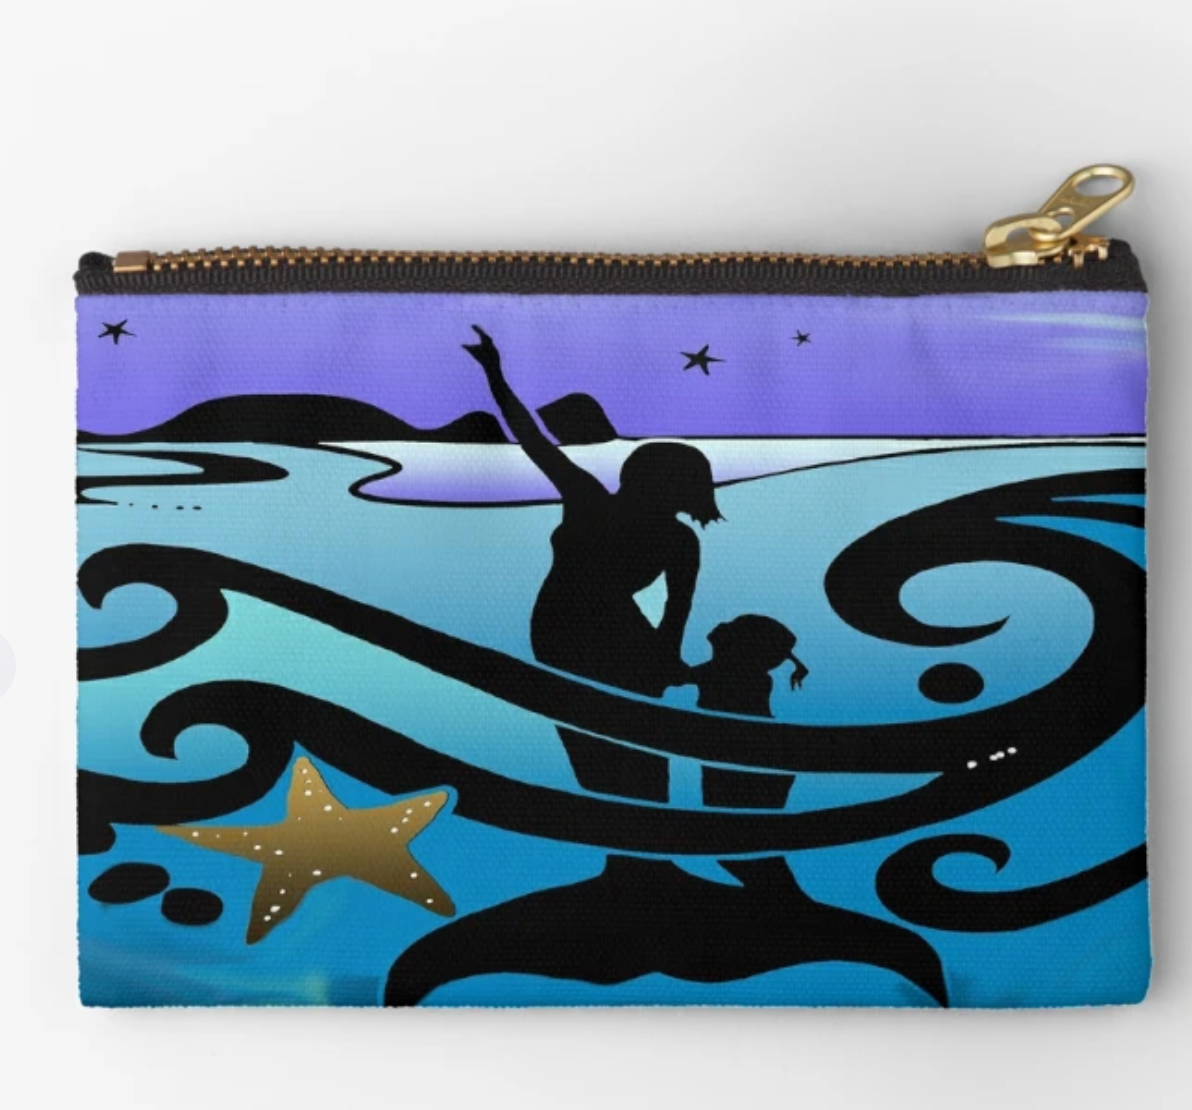 Gower mermaids purse